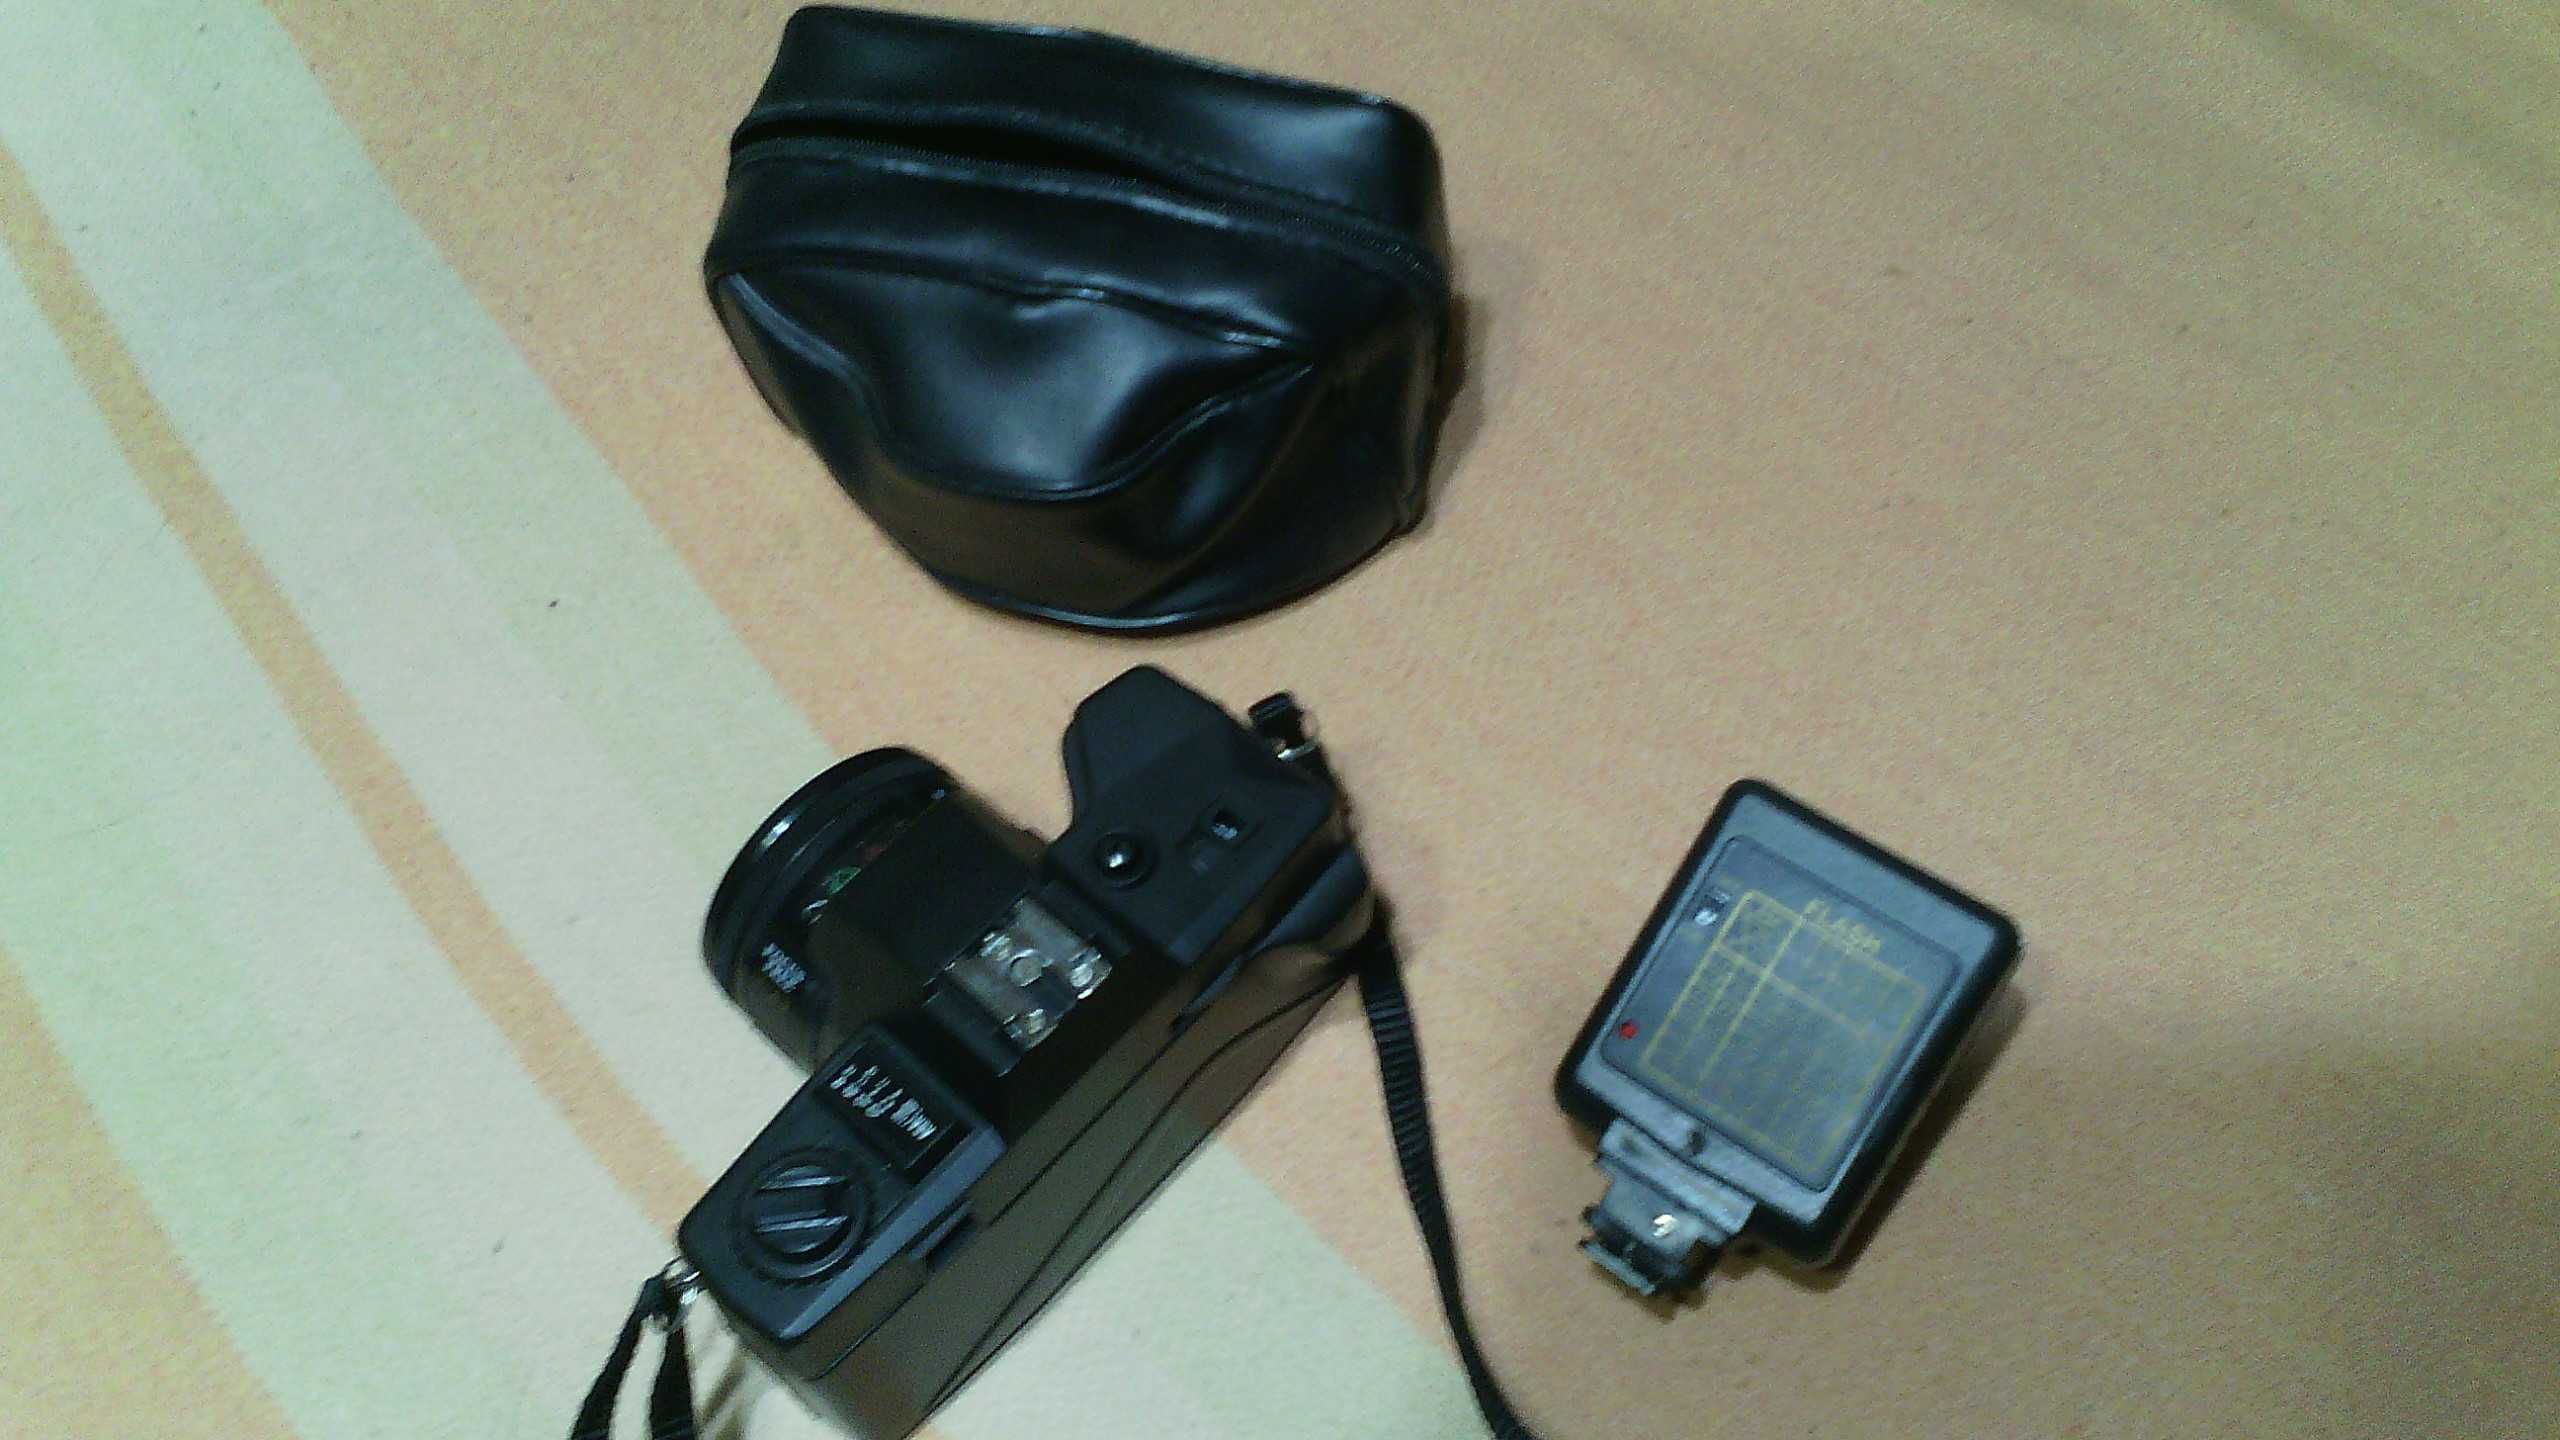 Фотоапарат nippon AR-4392F